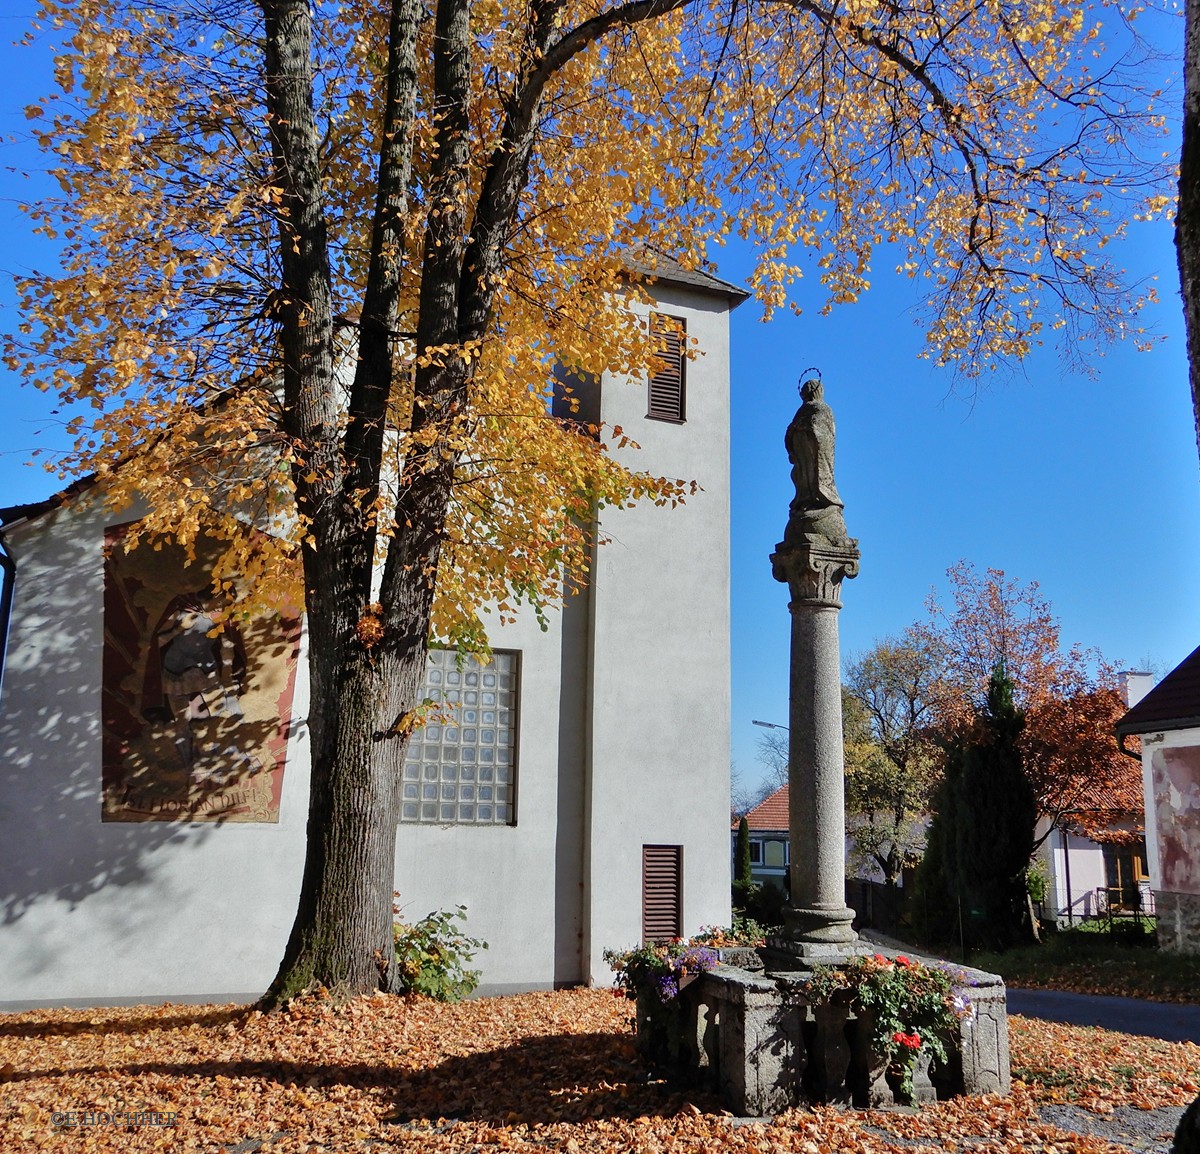 Immaculata-Säule in Weissenalbern